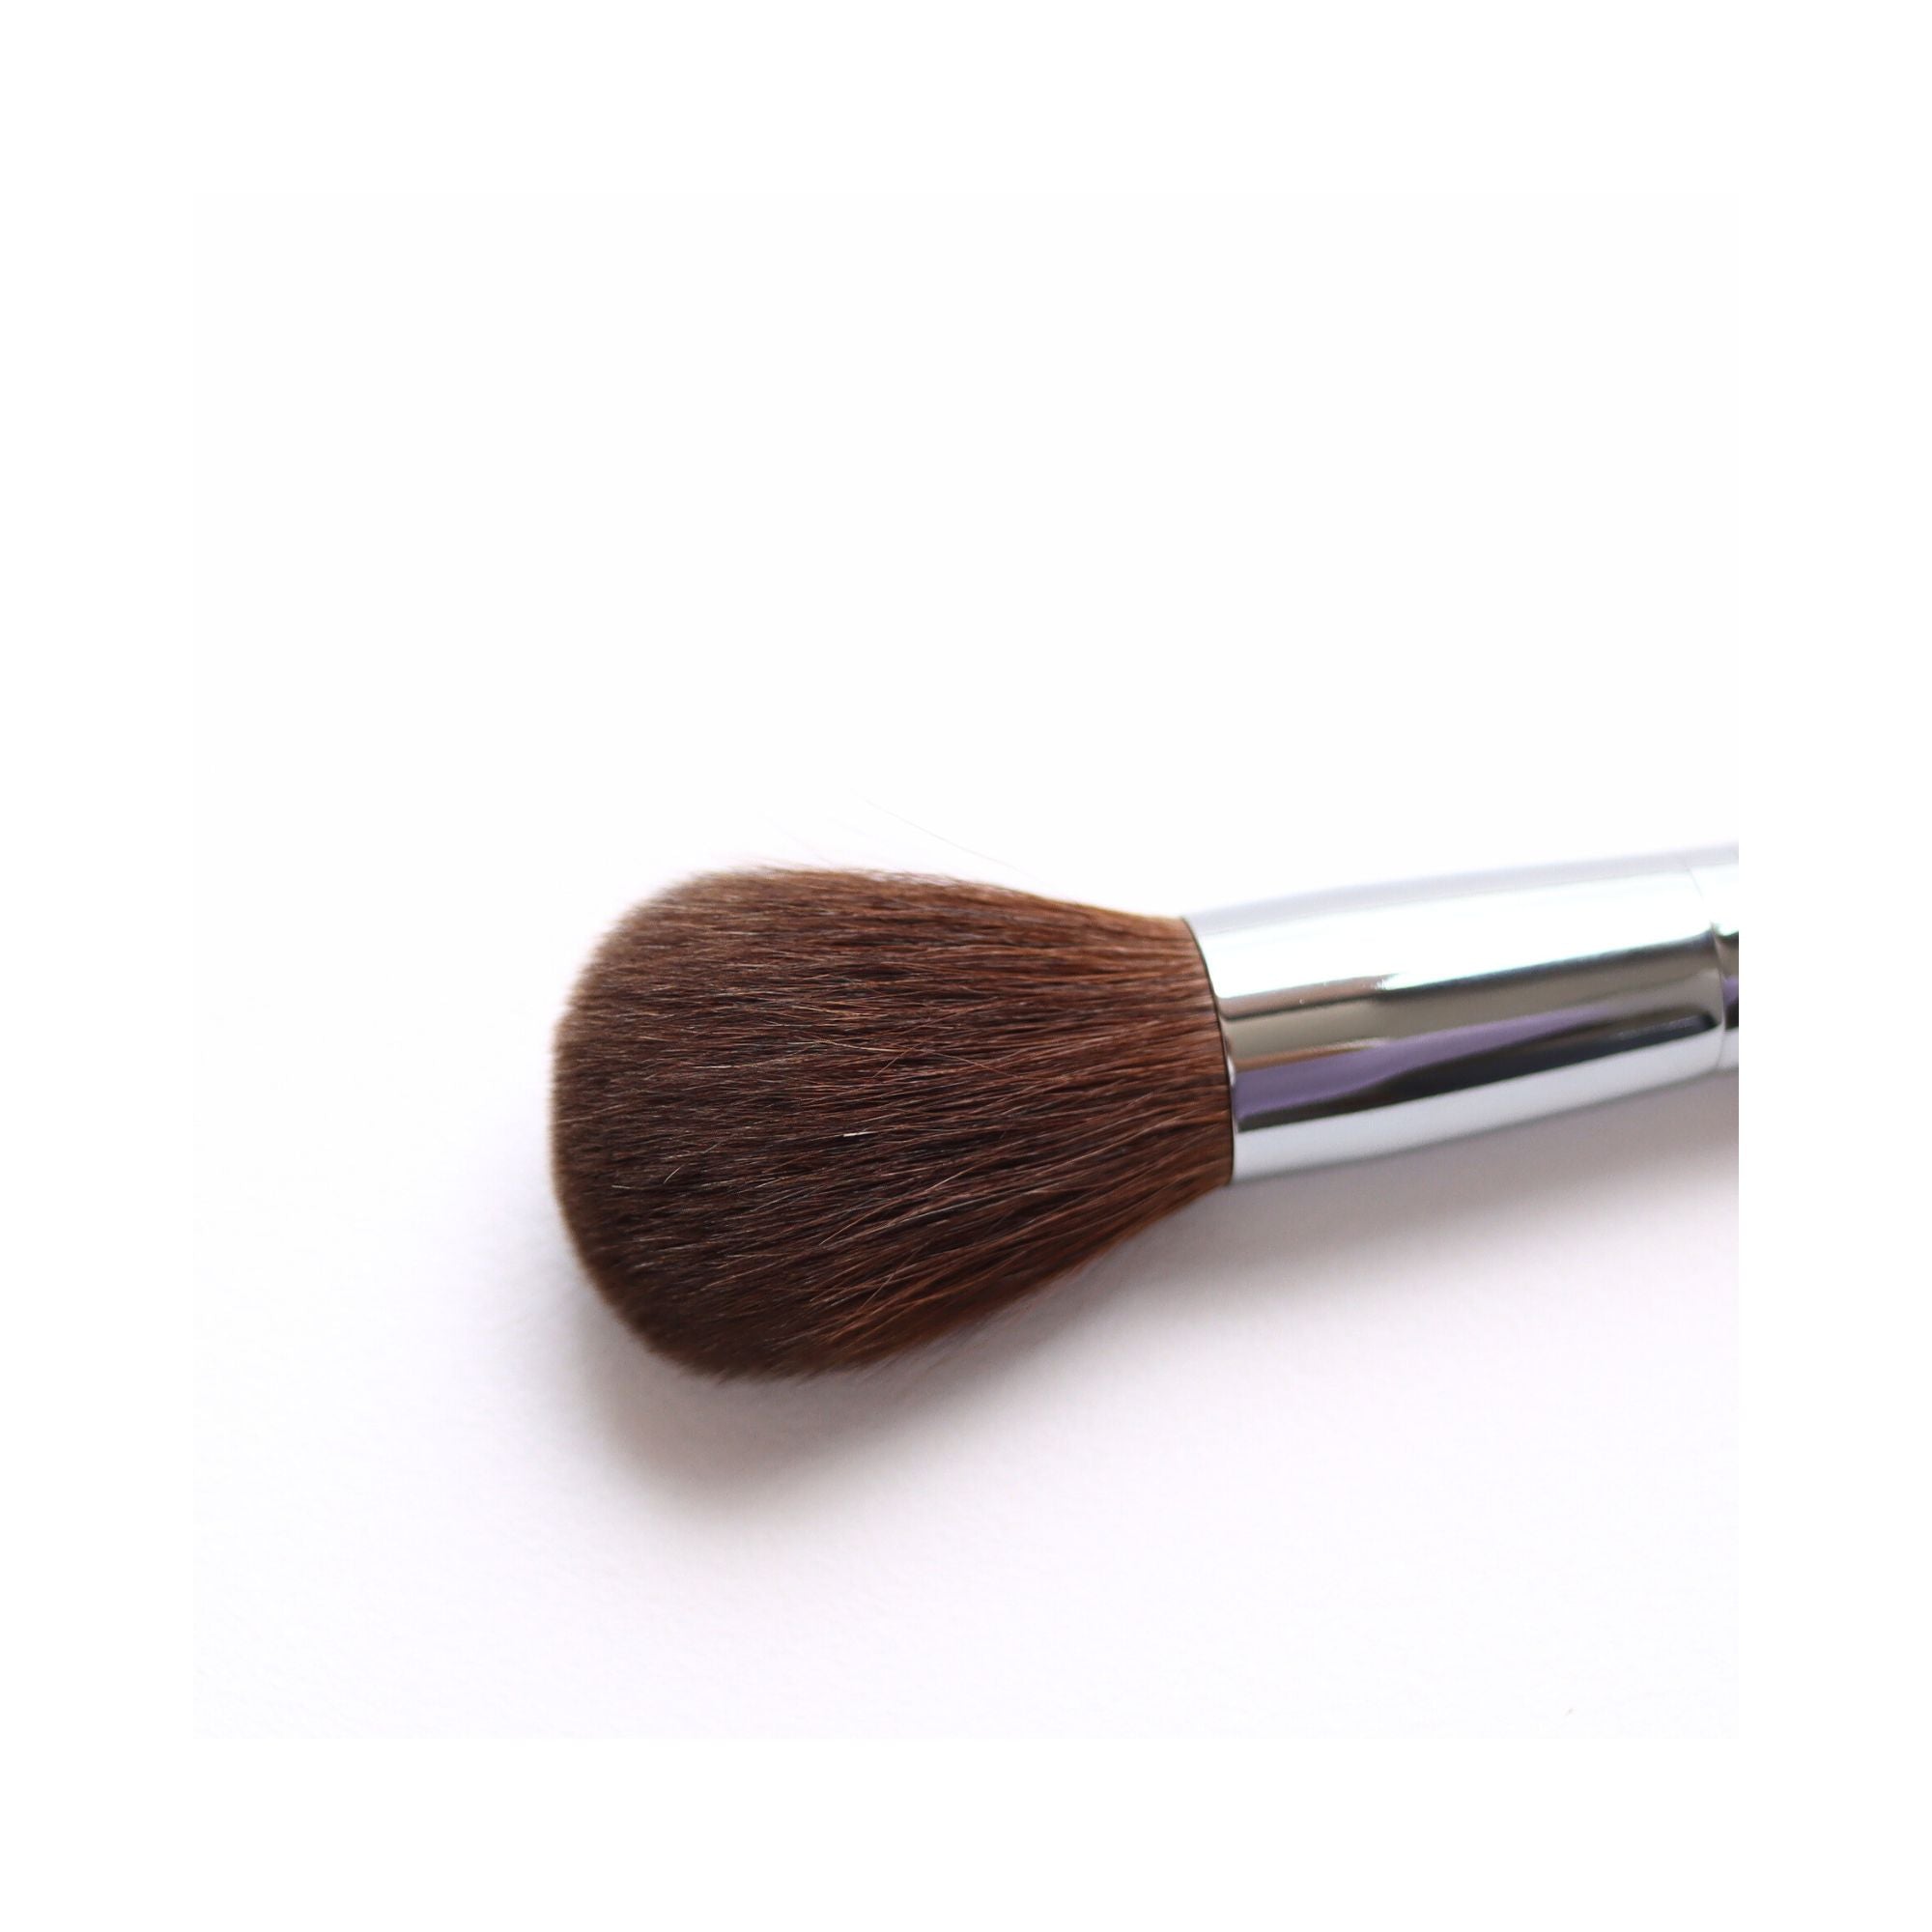 Tanseido AKA 赤 Series AC28 Face/Cheek Brush (Premium Collection) - Fude Beauty, Japanese Makeup Brushes